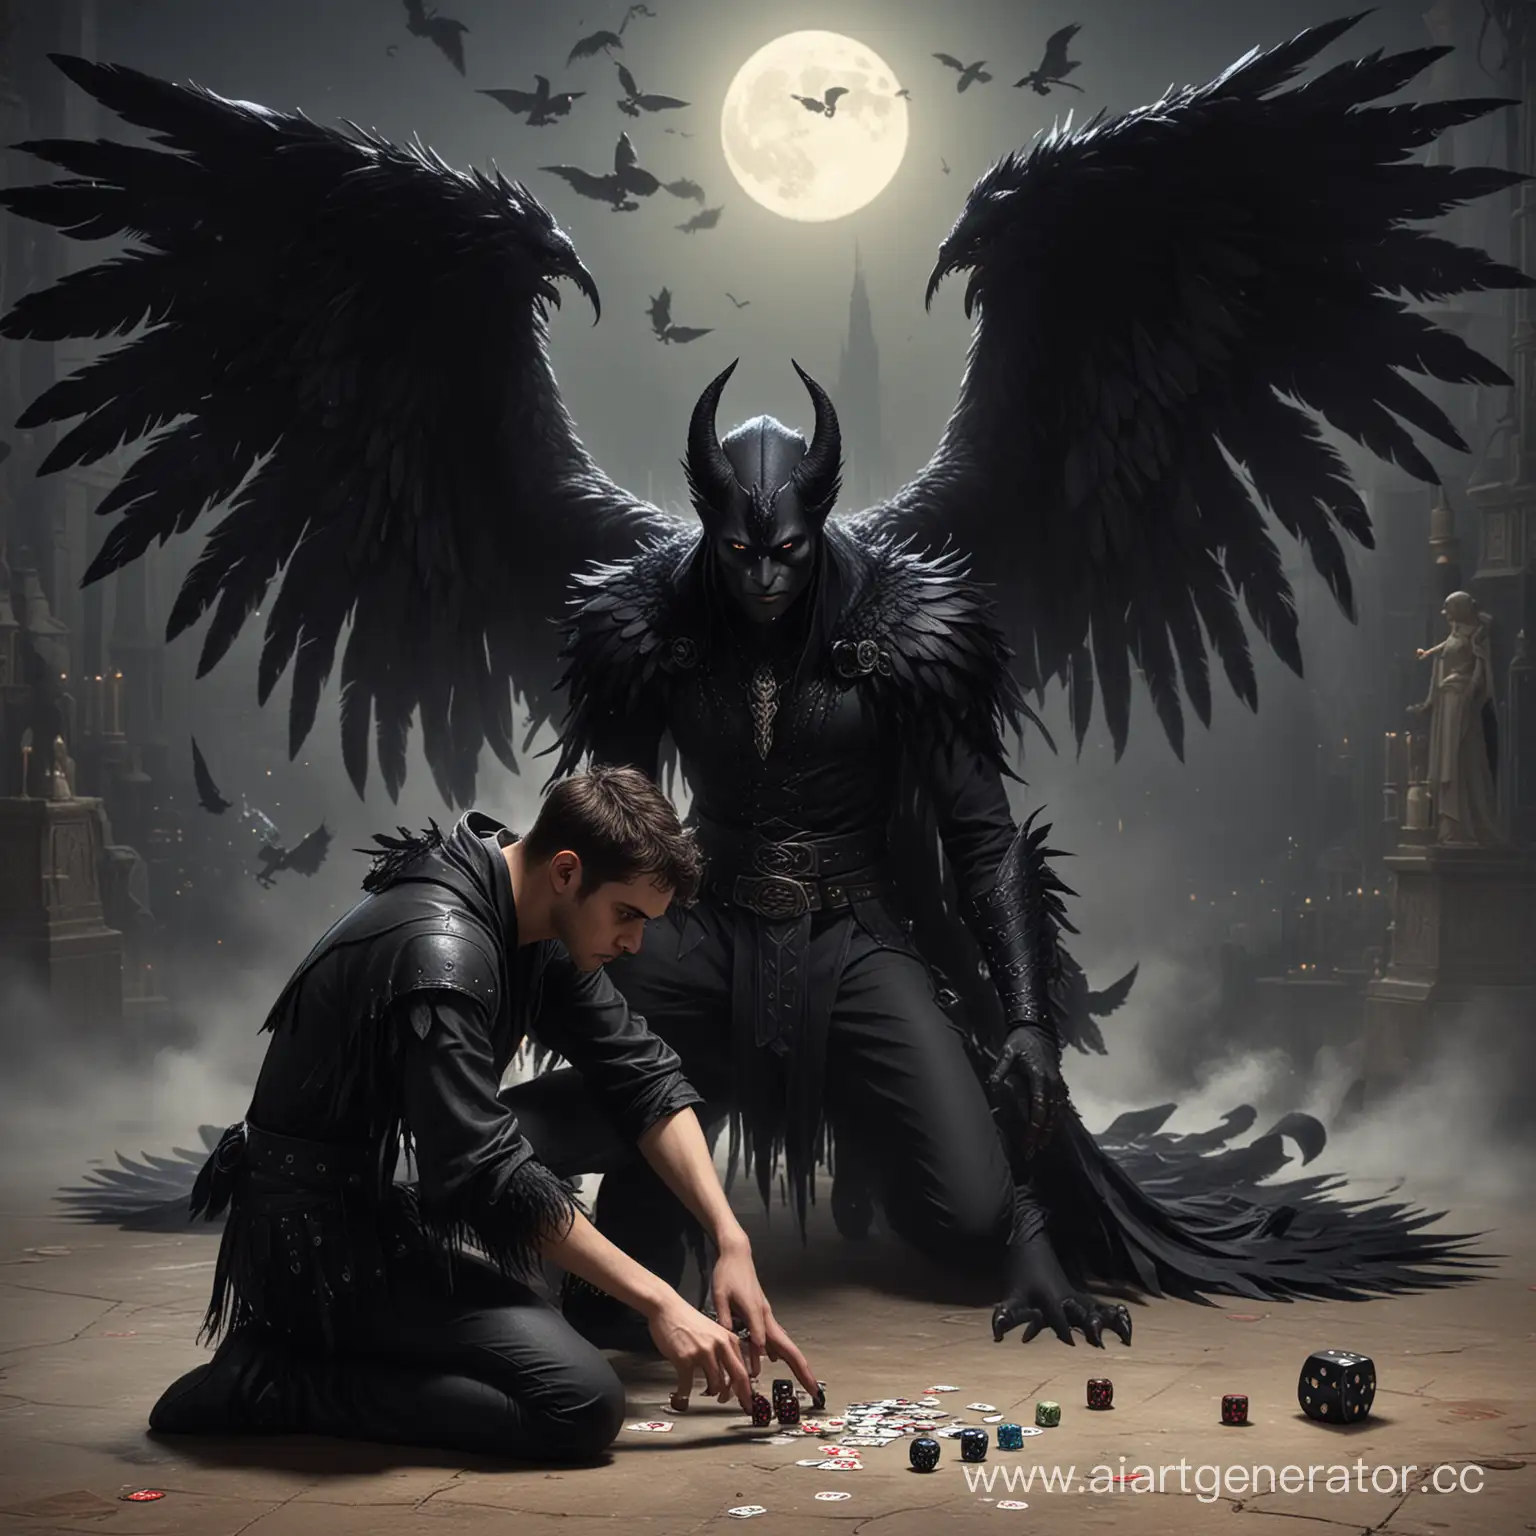 Dark-Winged-Demon-Kneeling-Before-DiceRolling-Man-at-Night